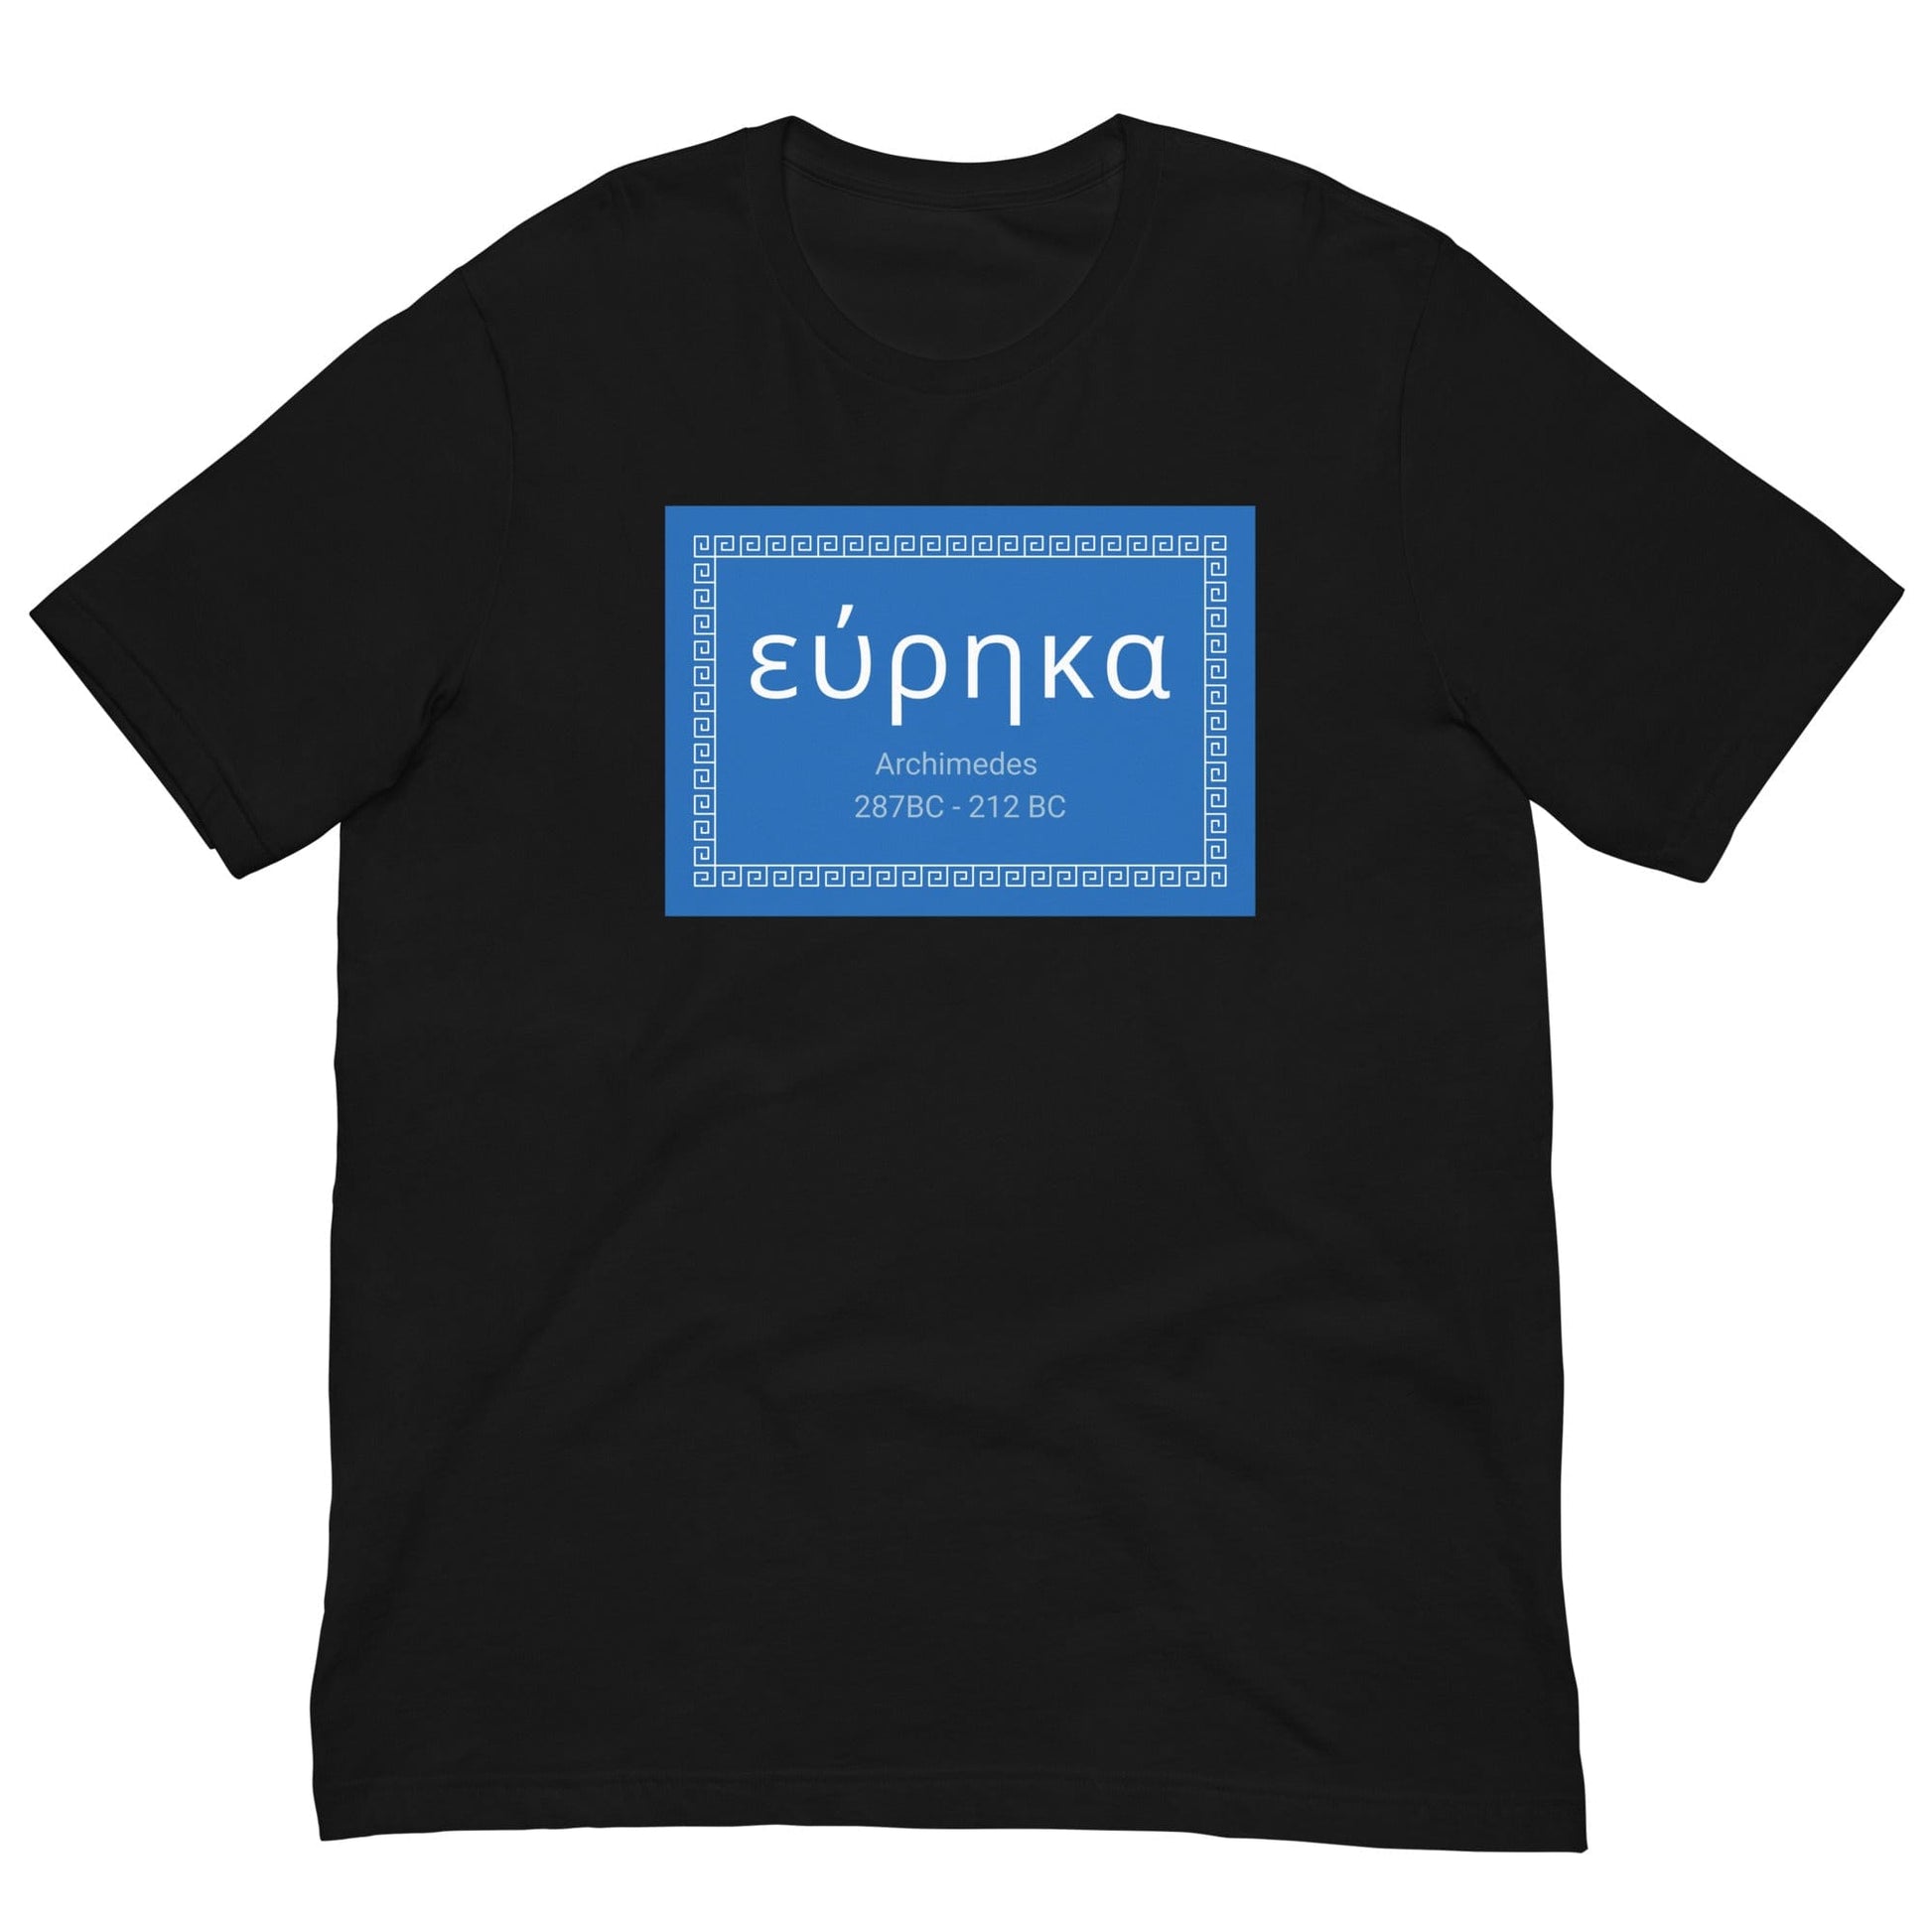 Eureka - Archimedes quote T-shirt Black / XS